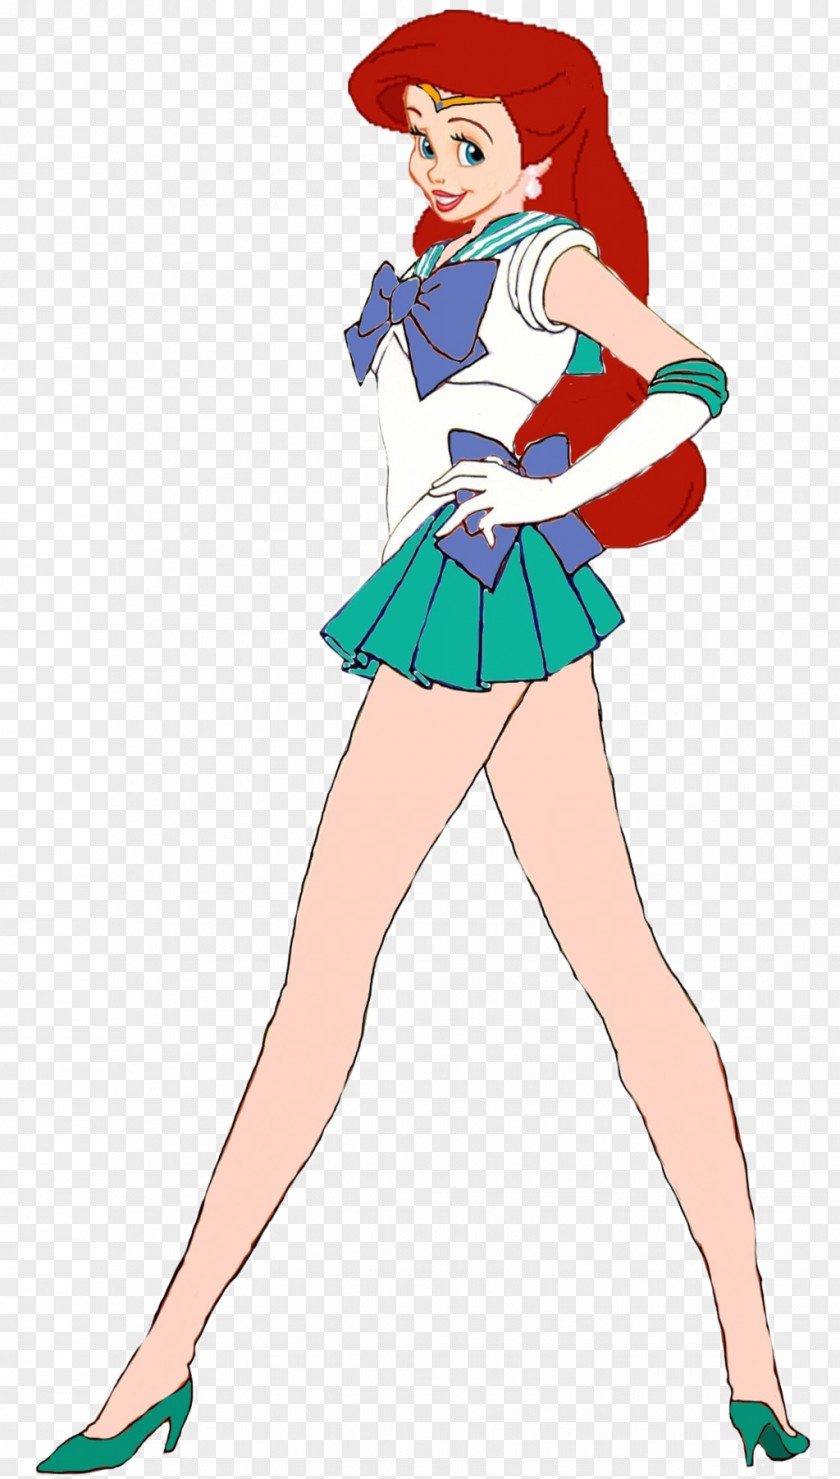 Sailor Moon Ariel The Little Mermaid King Triton Disney Princess Tricia Takanawa PNG